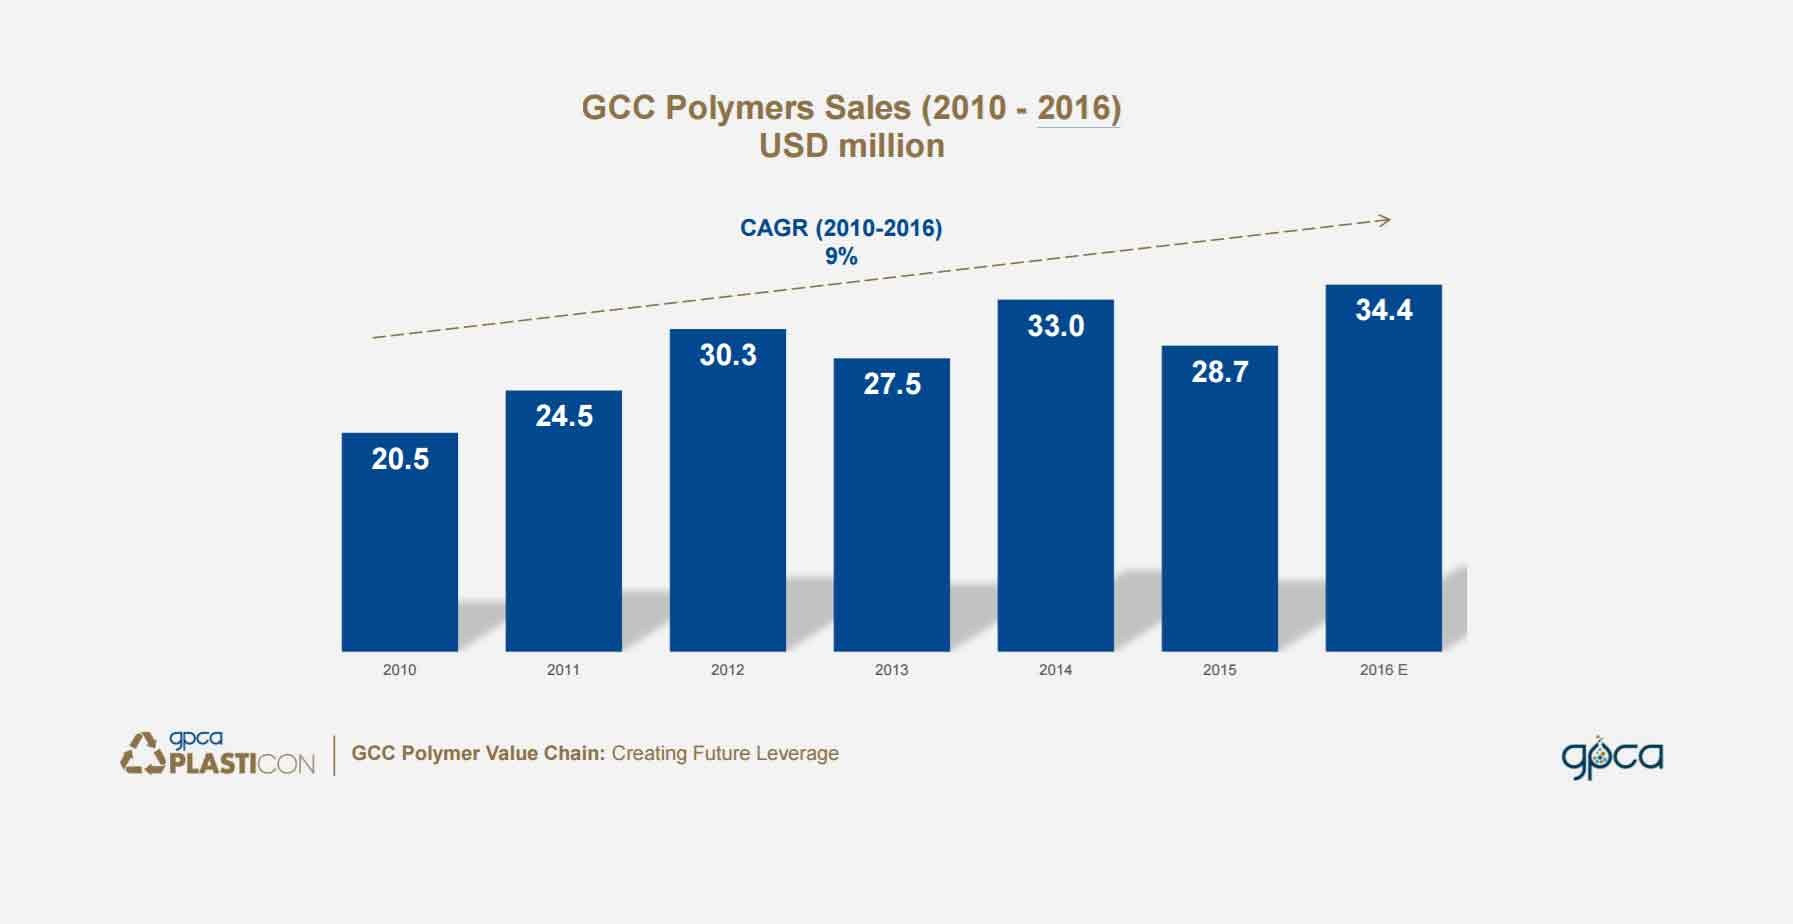 GCC polymer sales were estimated at USD 33-34 billion in 2016